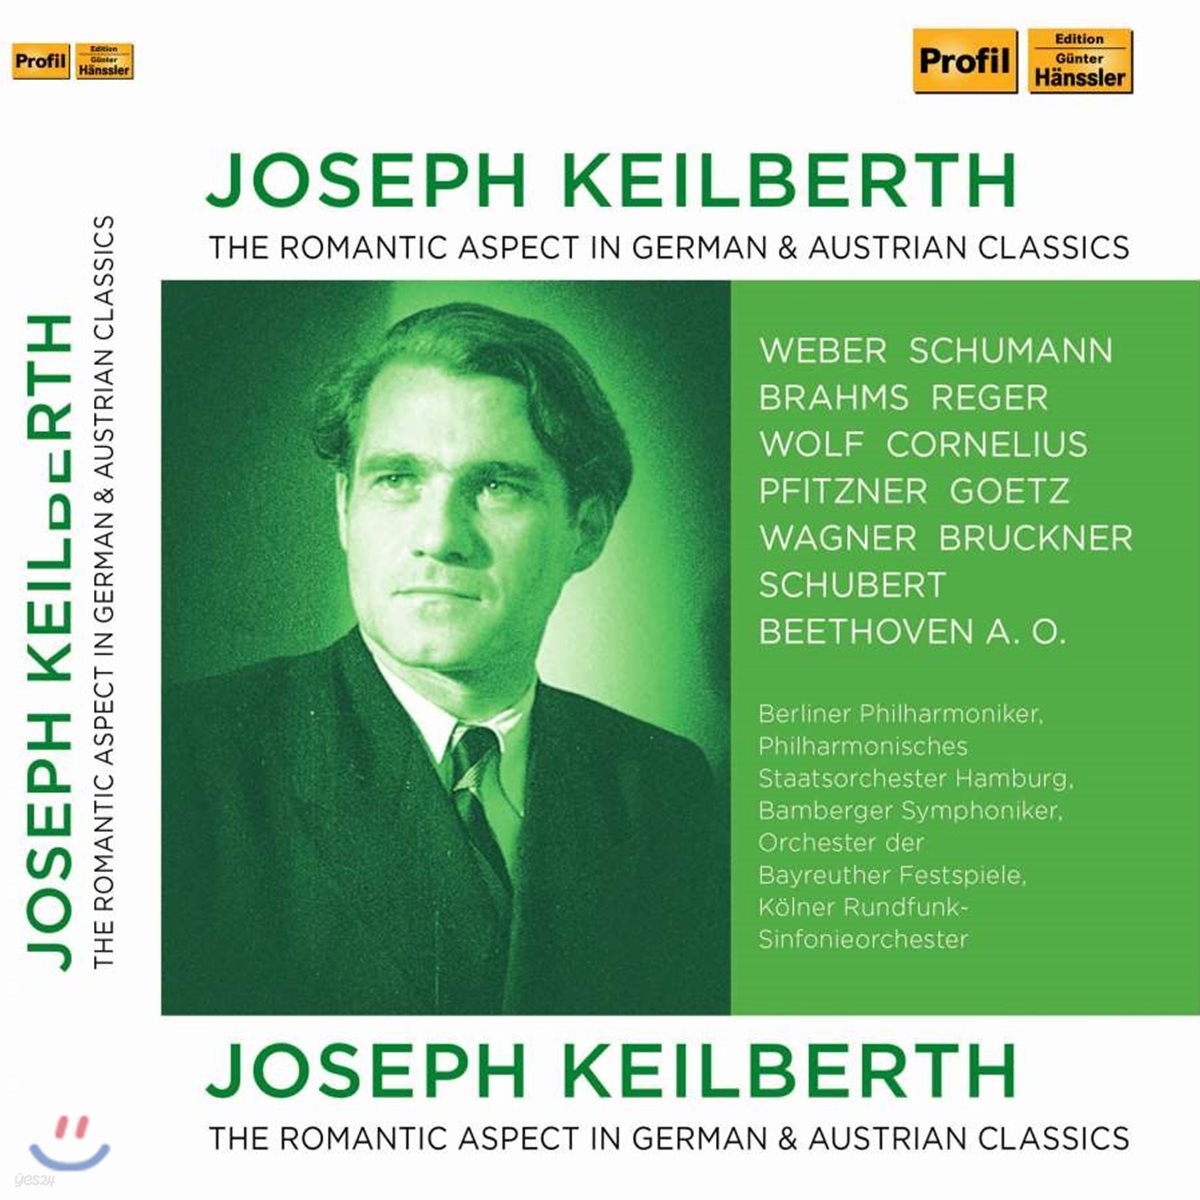 Joseph Keilberth 슈베르트: 미완성 교향곡 / 브람스: 교향곡 2번 / 브루크너: 교향곡 9번 / 베토벤: 교향곡 6번 '전원' 외 (The Romantic Aspect in German & Australian Classics)